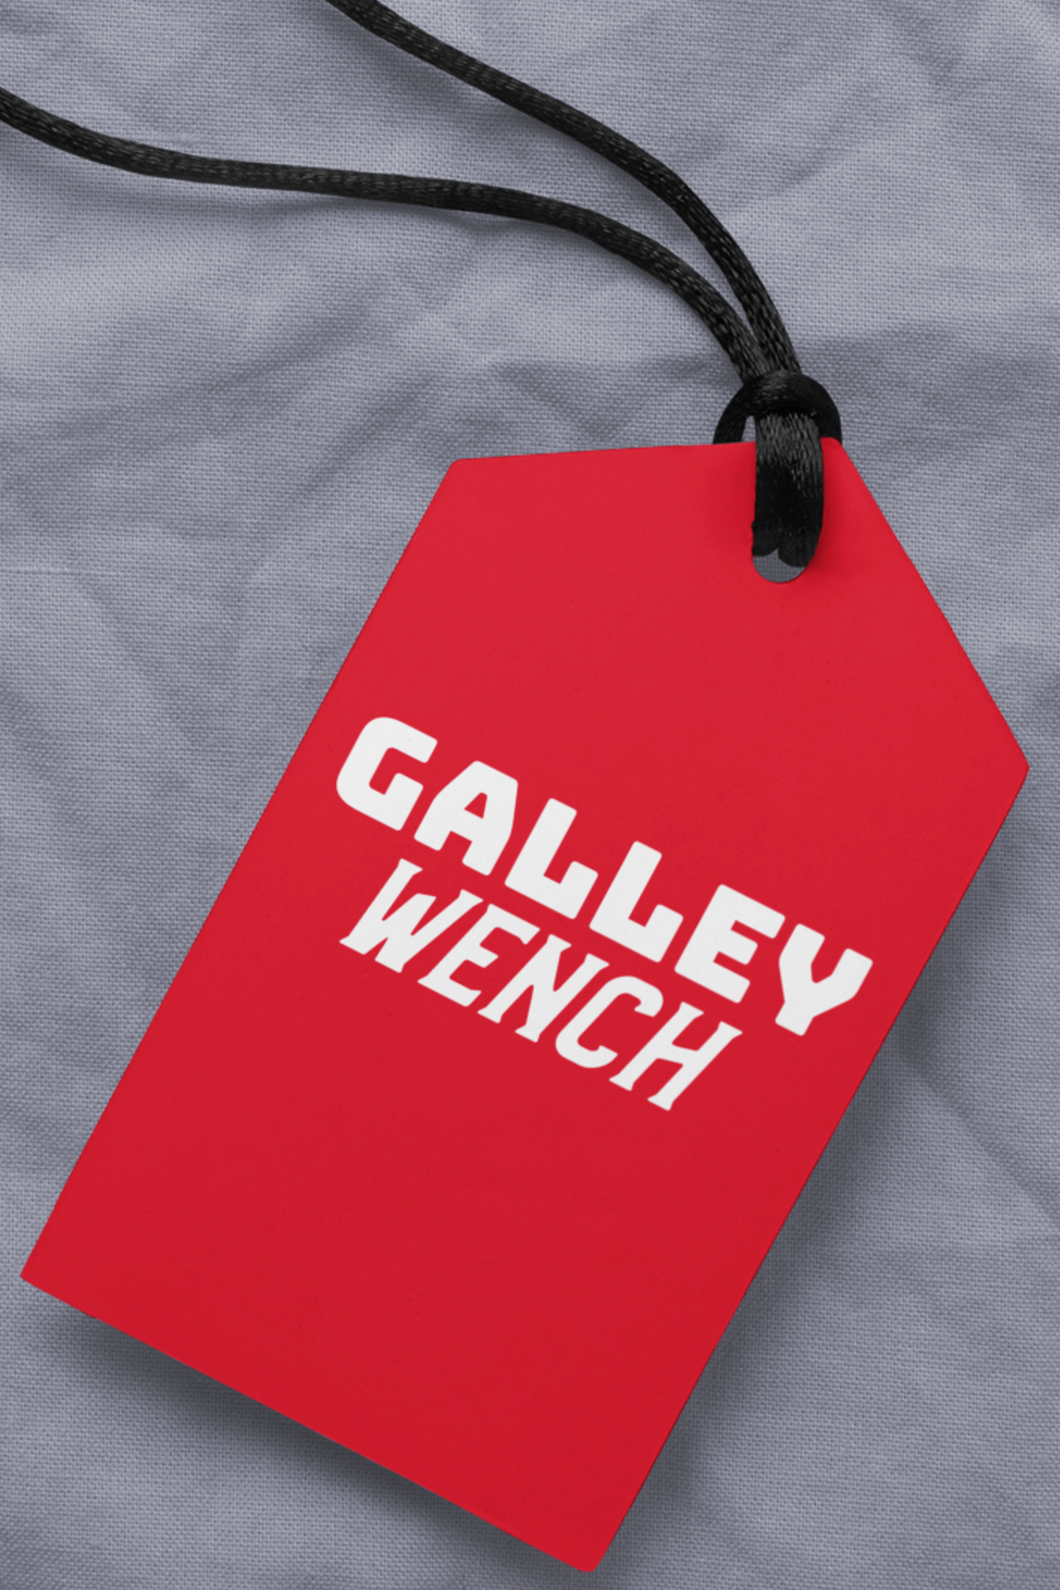 Luggage Tag - Galley Wench